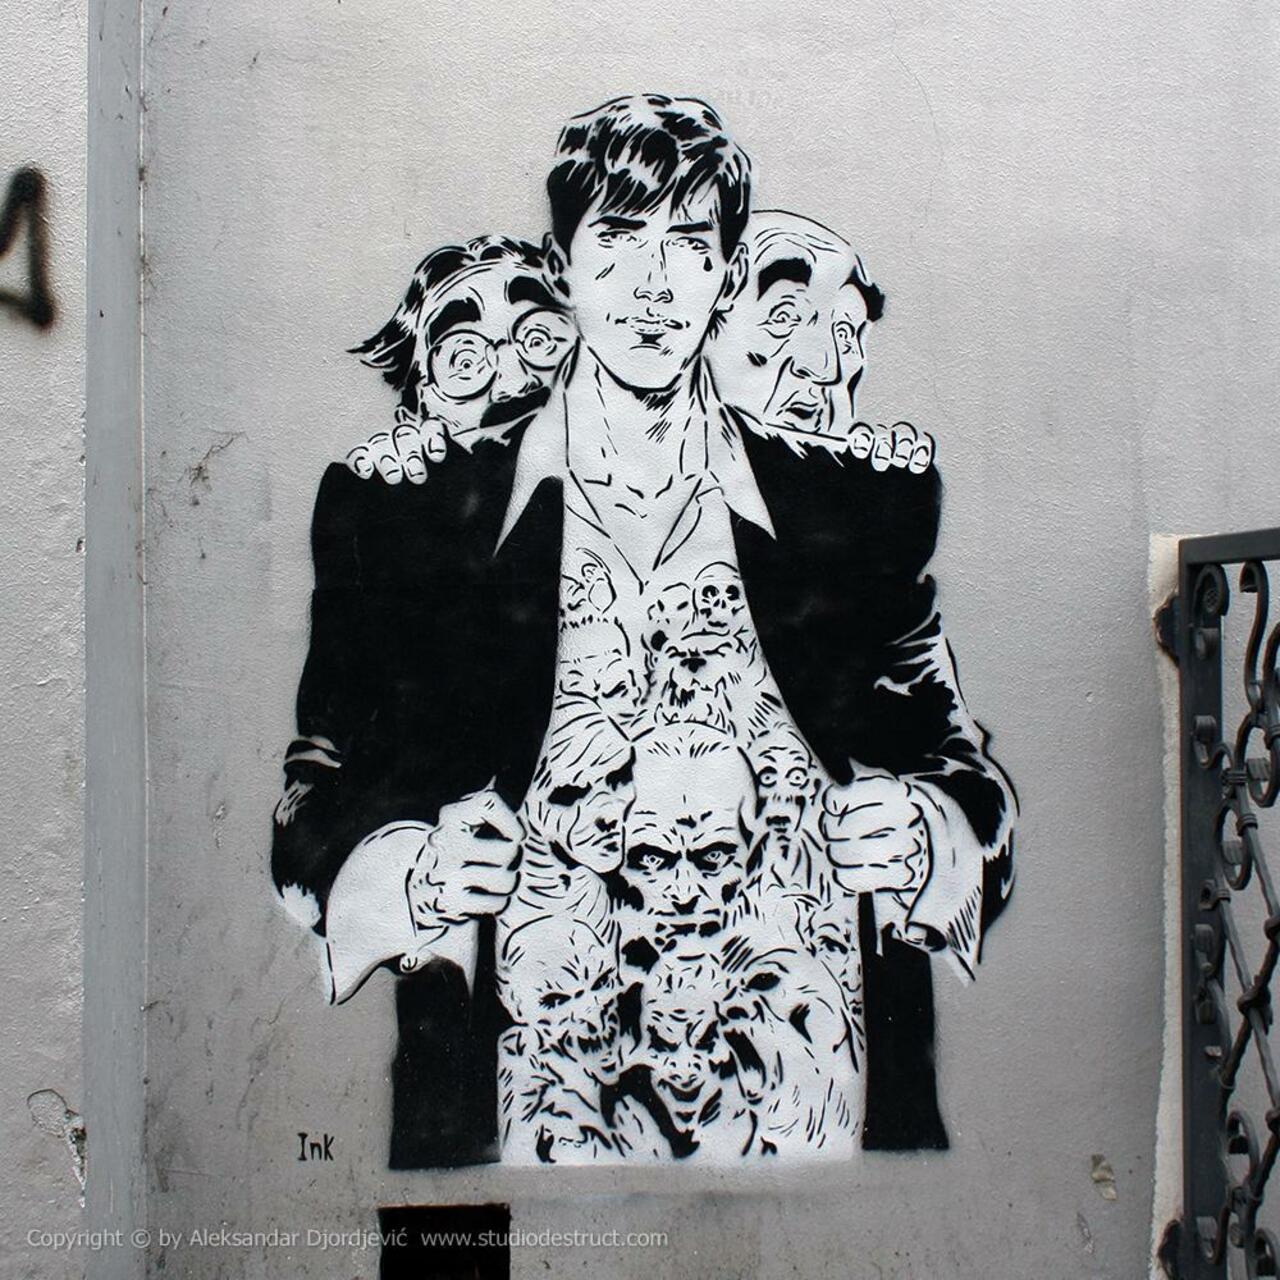 RT @BGgrafiti: Dylan Dog / Ink / Svetogorska
#BeogradskiGrafiti #StreetArt #Graffiti #Beograd #Belgrade #Grafiti http://t.co/WEhaE6w2C4